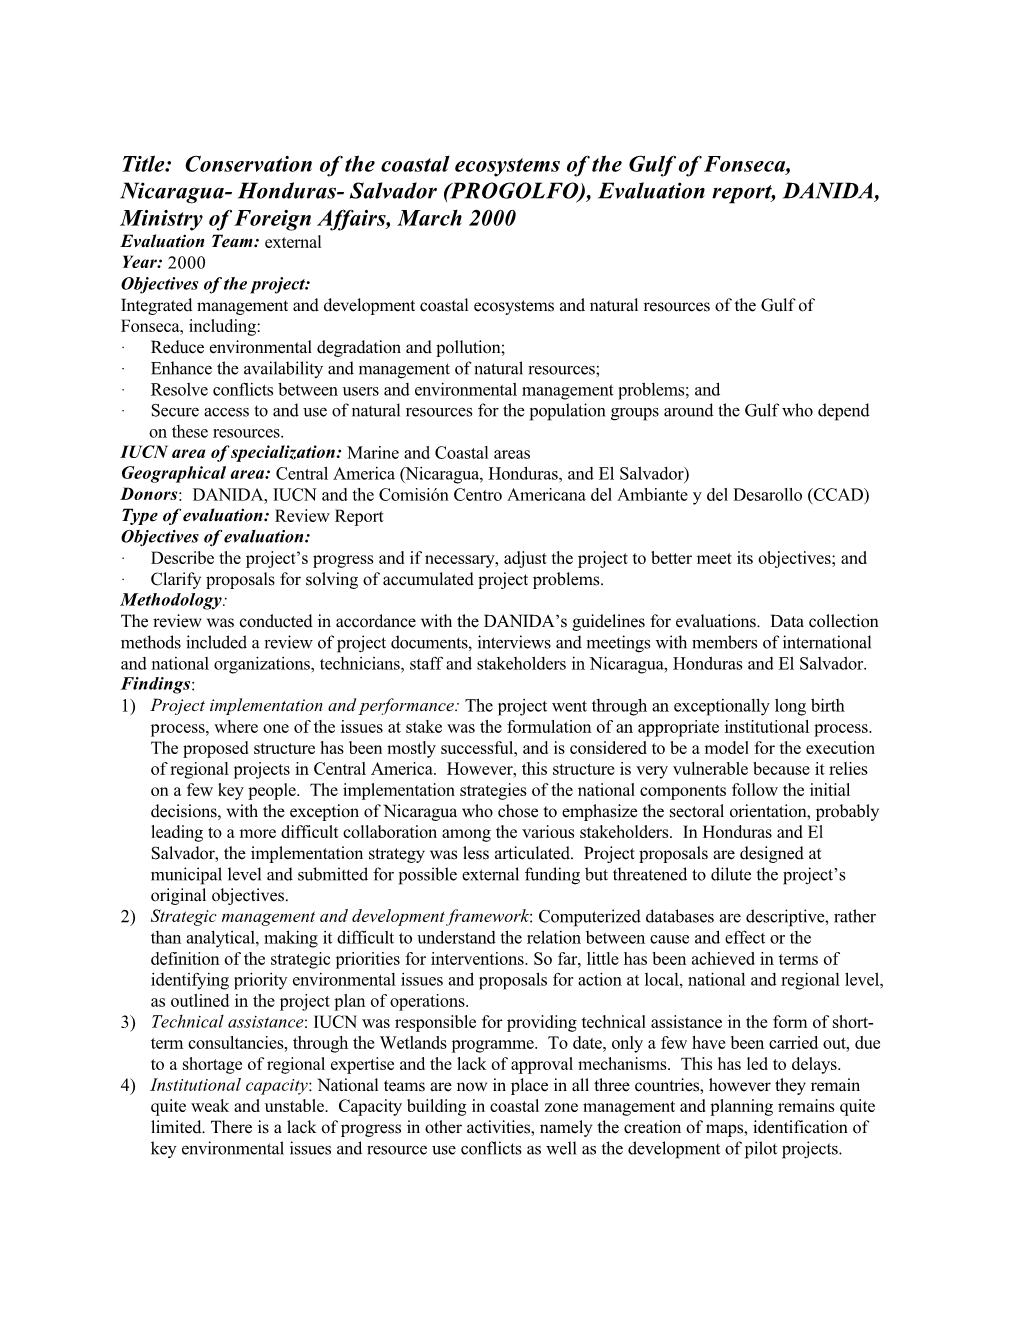 Title: Conservation of the Coastal Ecosystems of the Gulf of Fonseca, Nicaragua- Honduras- Salvador (PROGOLFO), Evaluation Repor